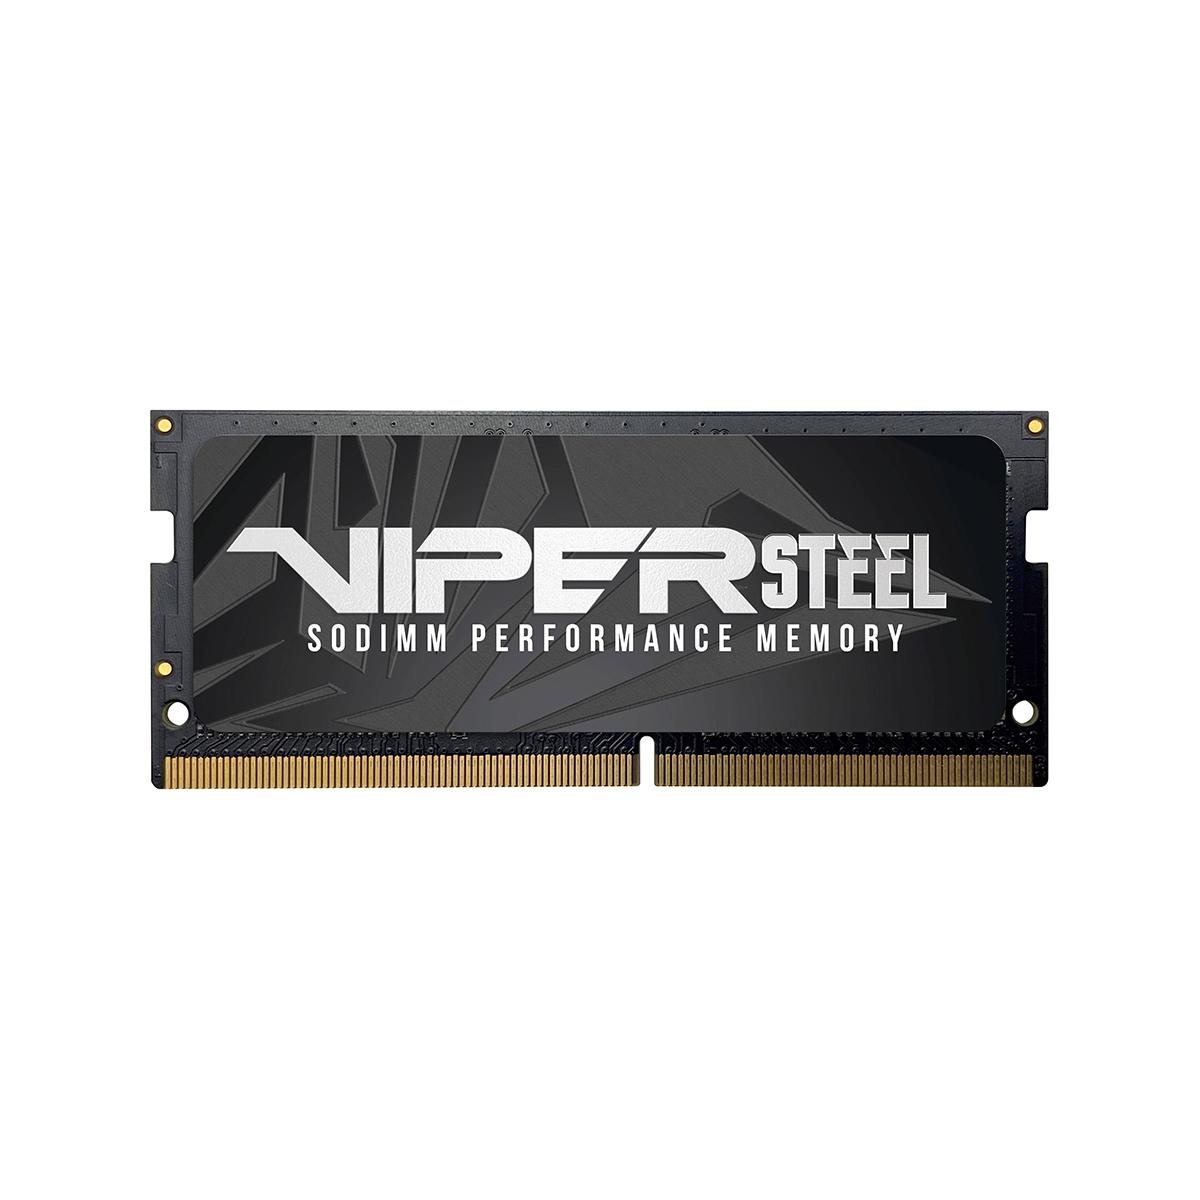 MEMORIA SODIMM DDR4 PATRIOT (PVS416G240C5S) VIPERSTEEL 16GB 2400MHZ, GRAY HEATSINK,CL15 - PVS416G240C5S